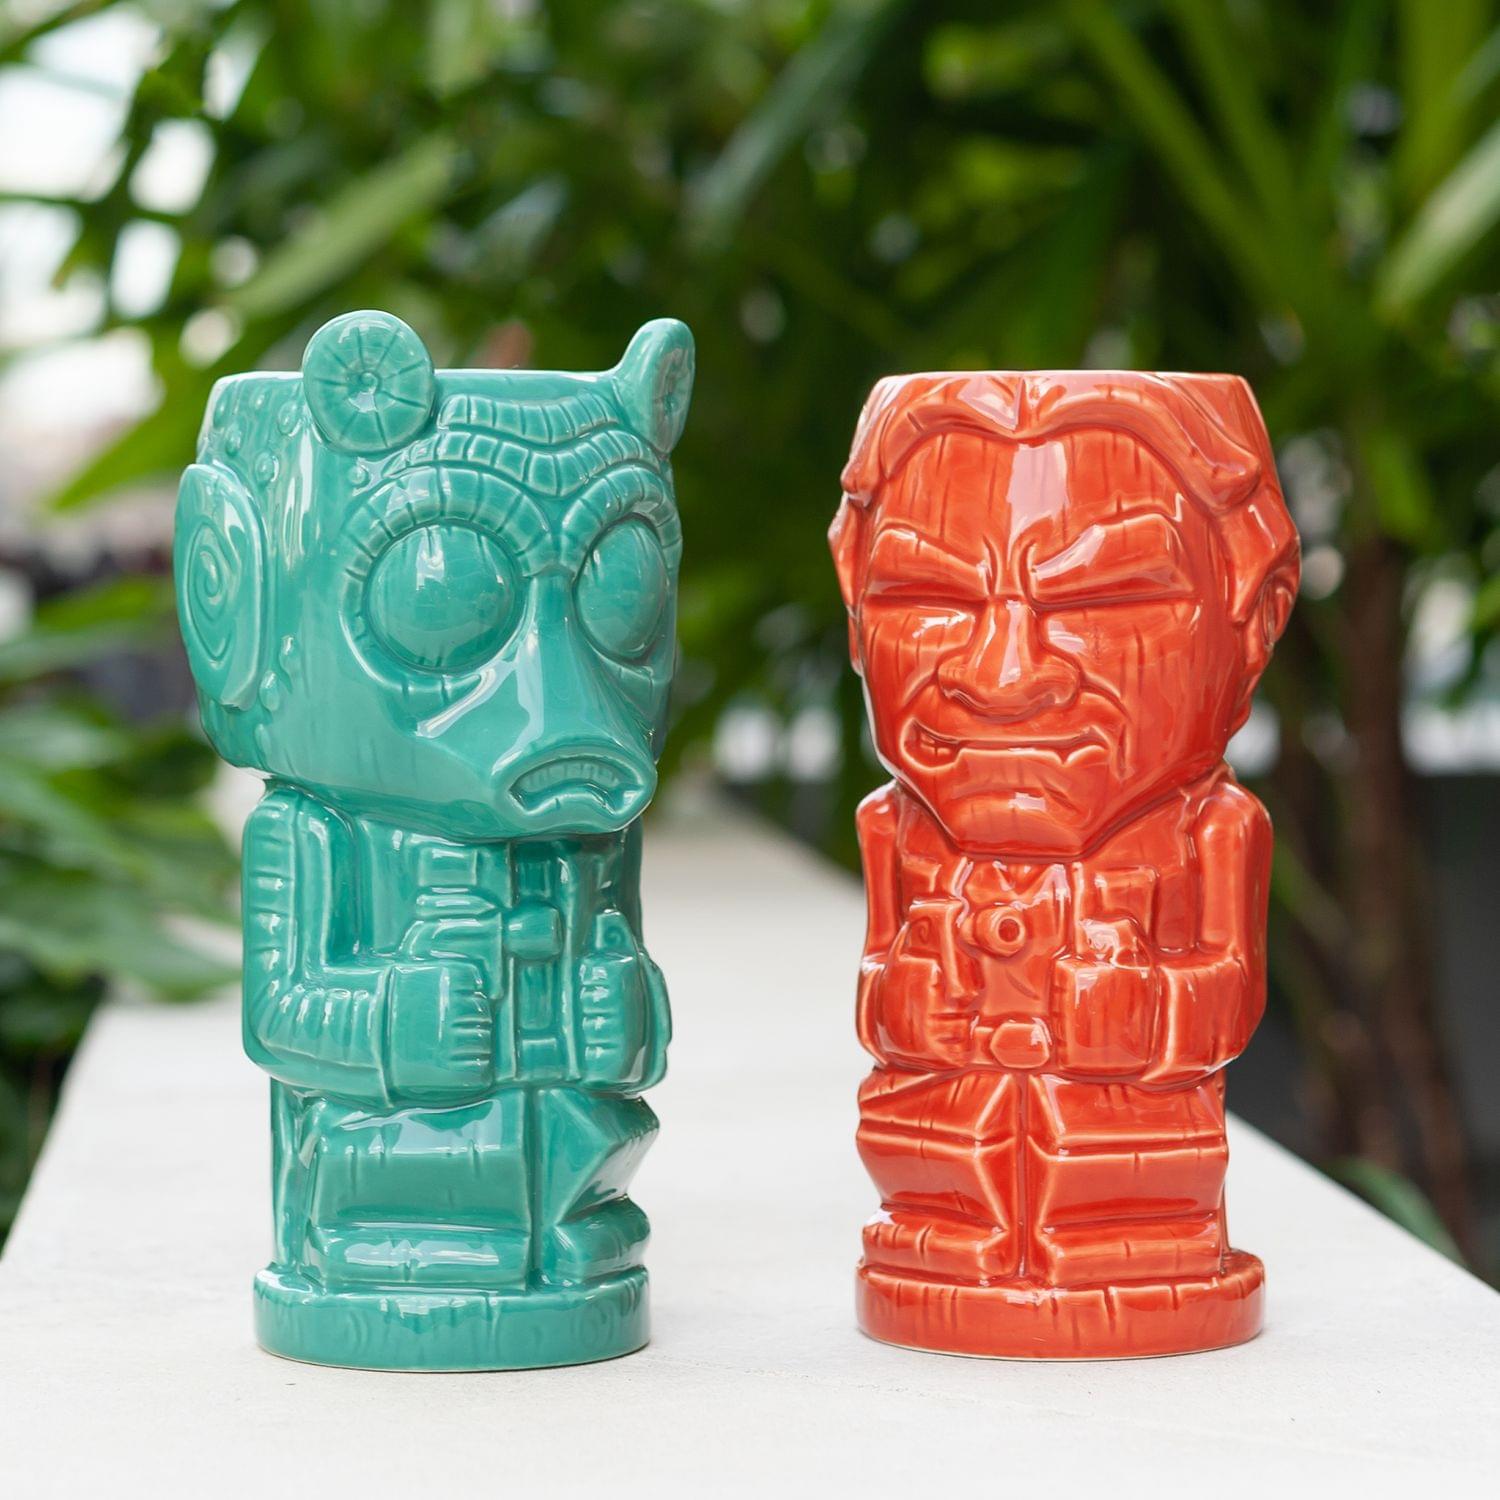 Geeki Tikis Star Wars Han Solo & Greedo Mugs | Star Wars Tiki Style Ceramic Cups